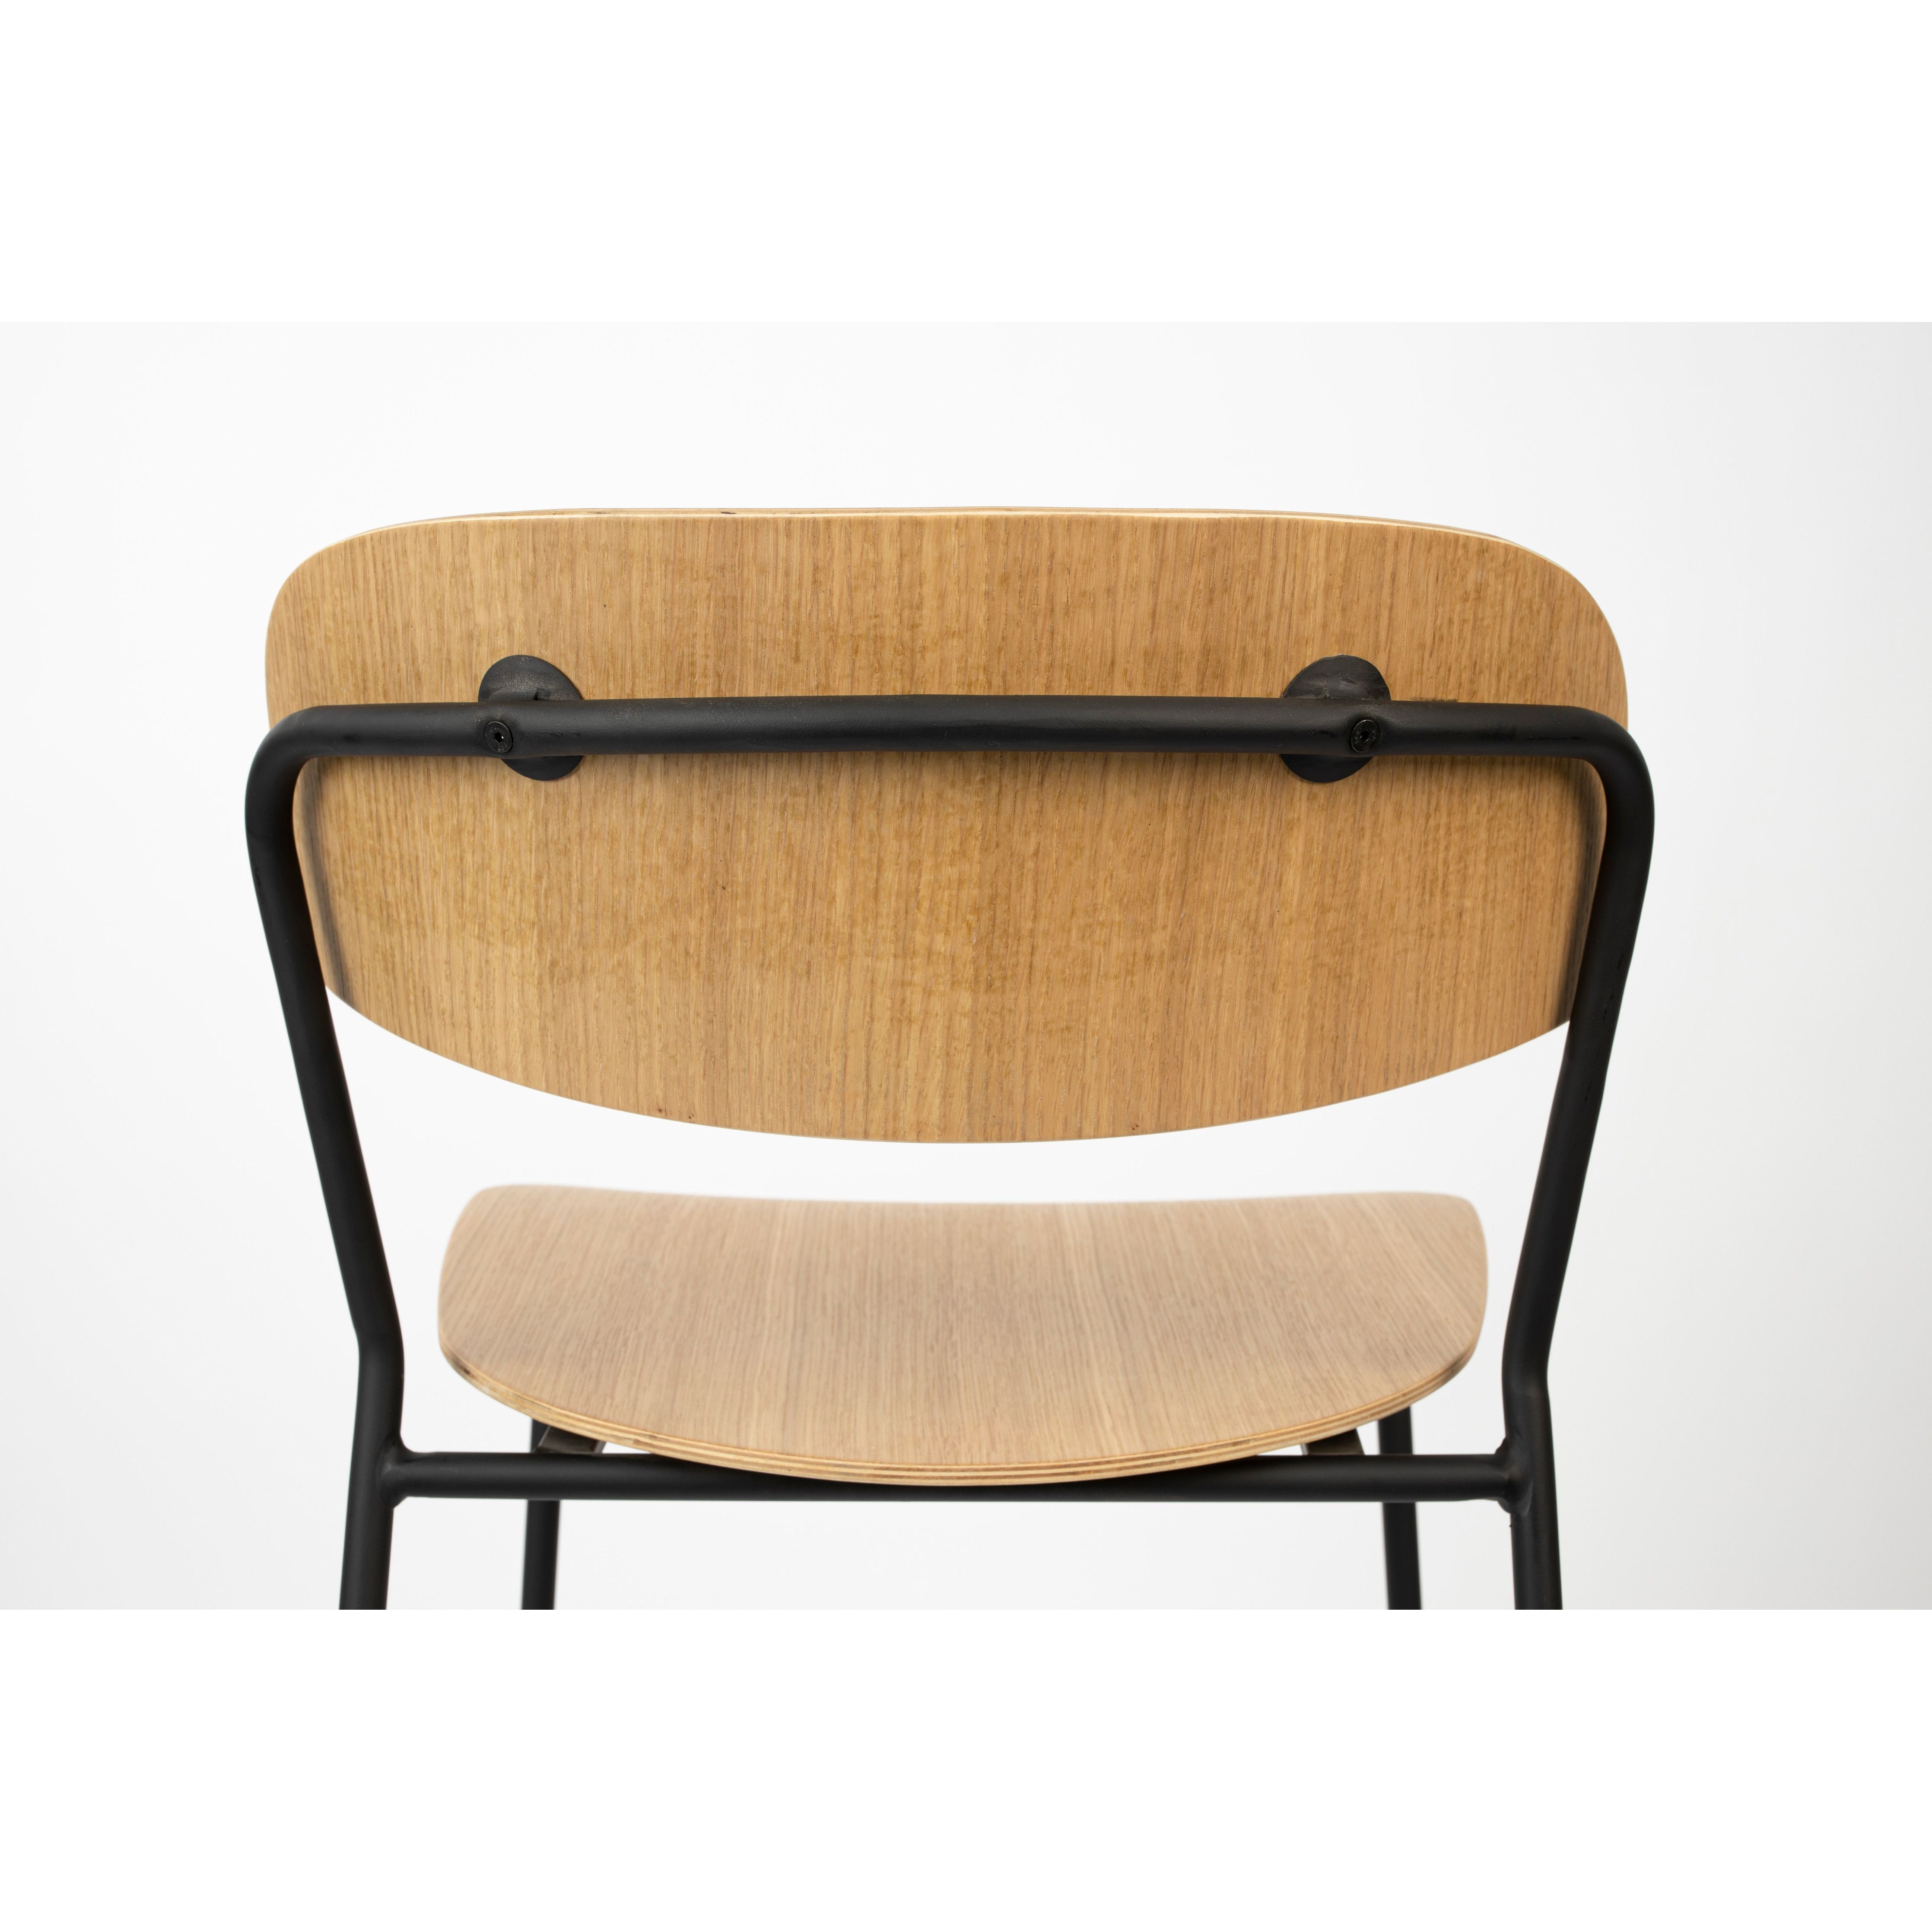 Bar stool jolien black/wood